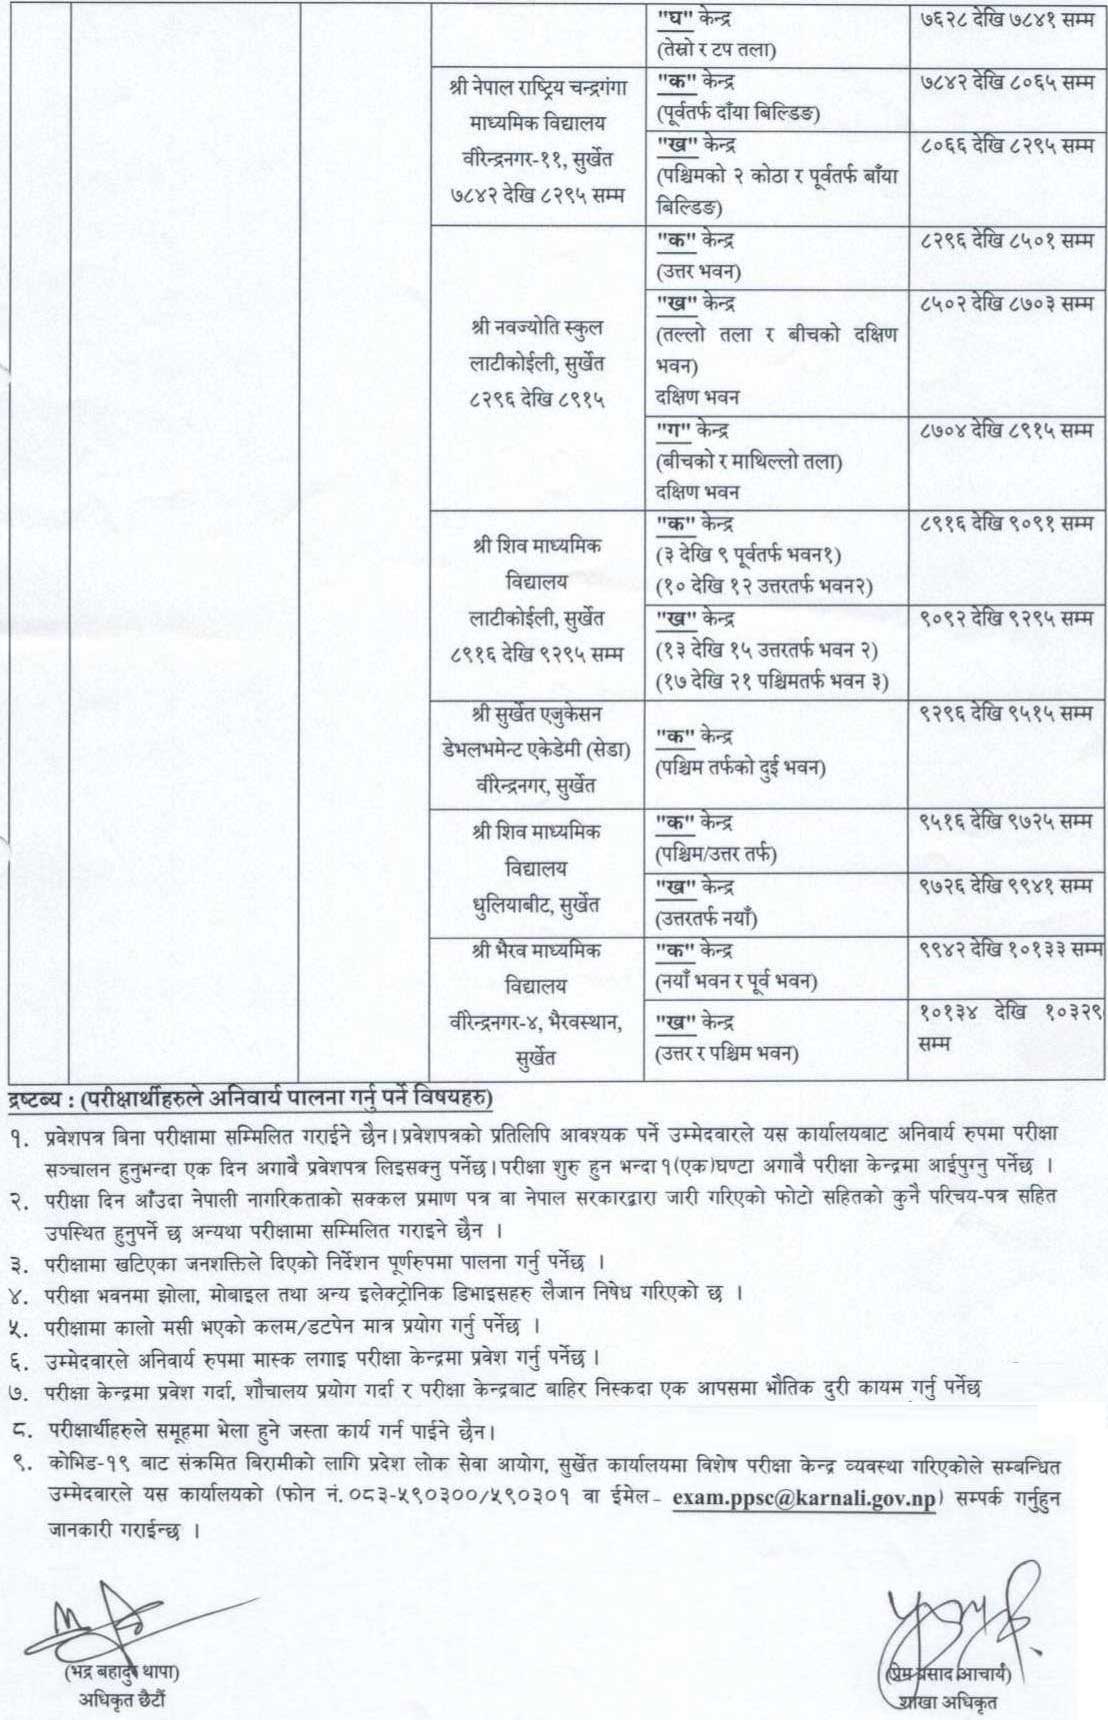 Karnali Pradesh Lok Sewa 5th Level Assistant Written Exam Center